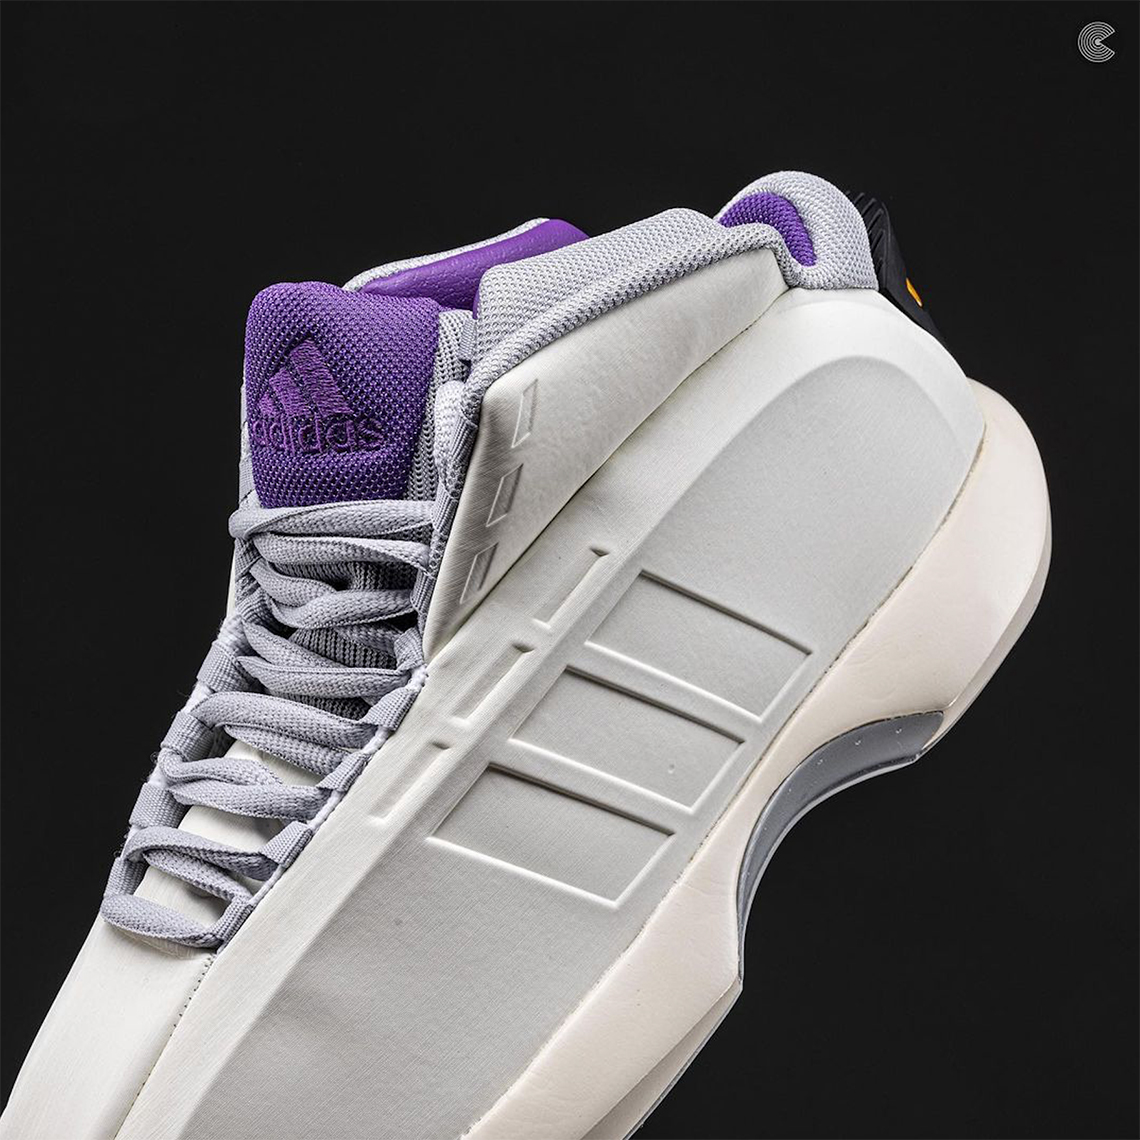 adidas Sleeve crazy 1 off white purple grey 7